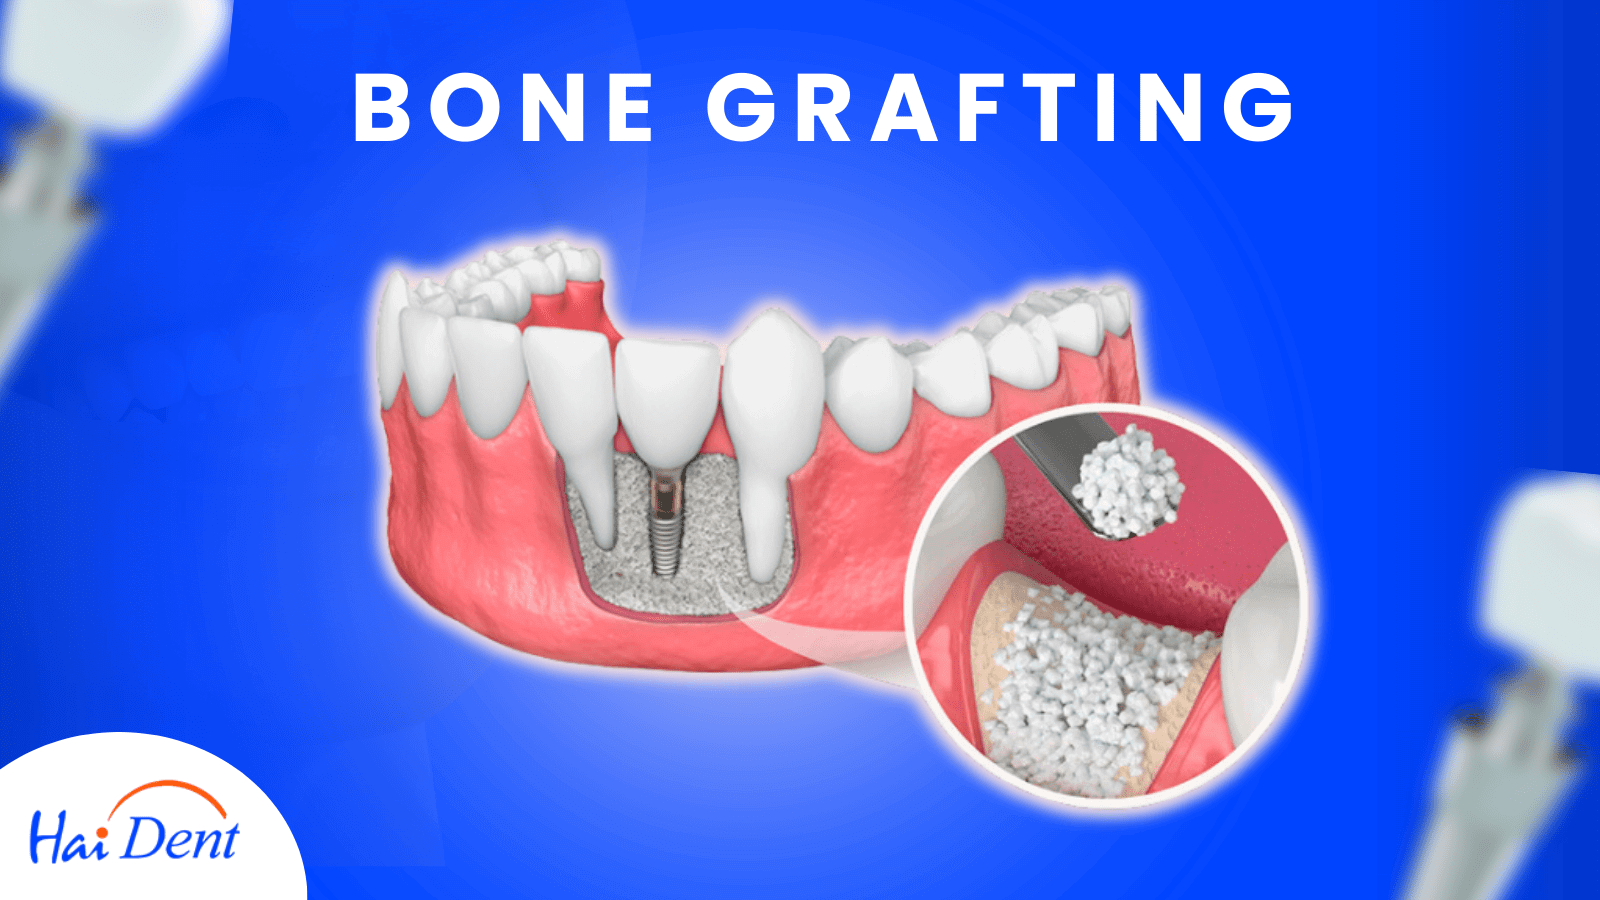 Dental bone grafting cost in india